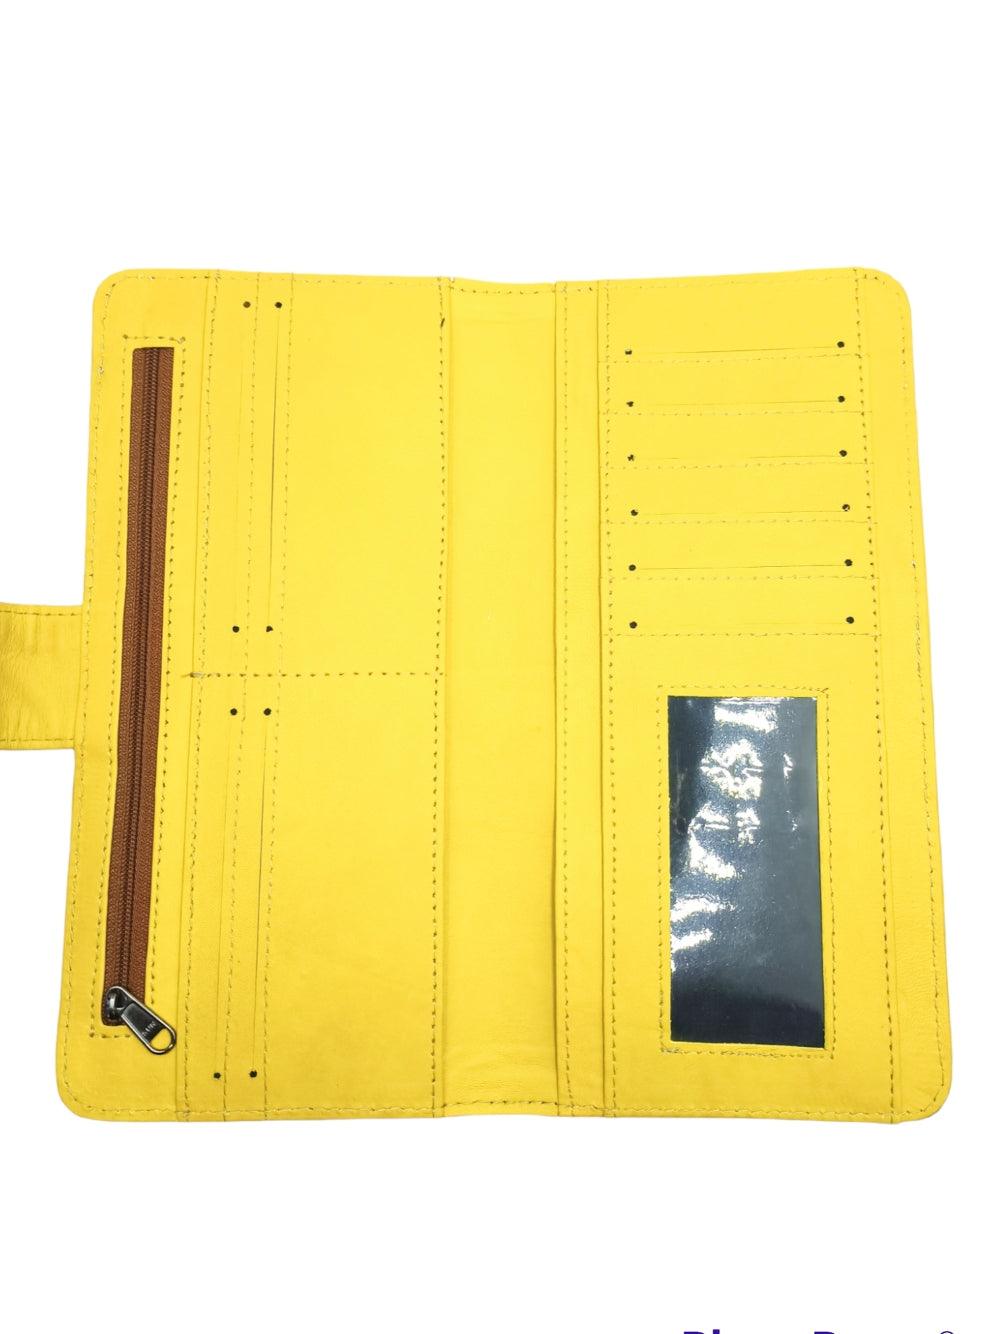 Travel Wallet Leather | Casual Clutch | Regular Size - ZANSKAR ARTS